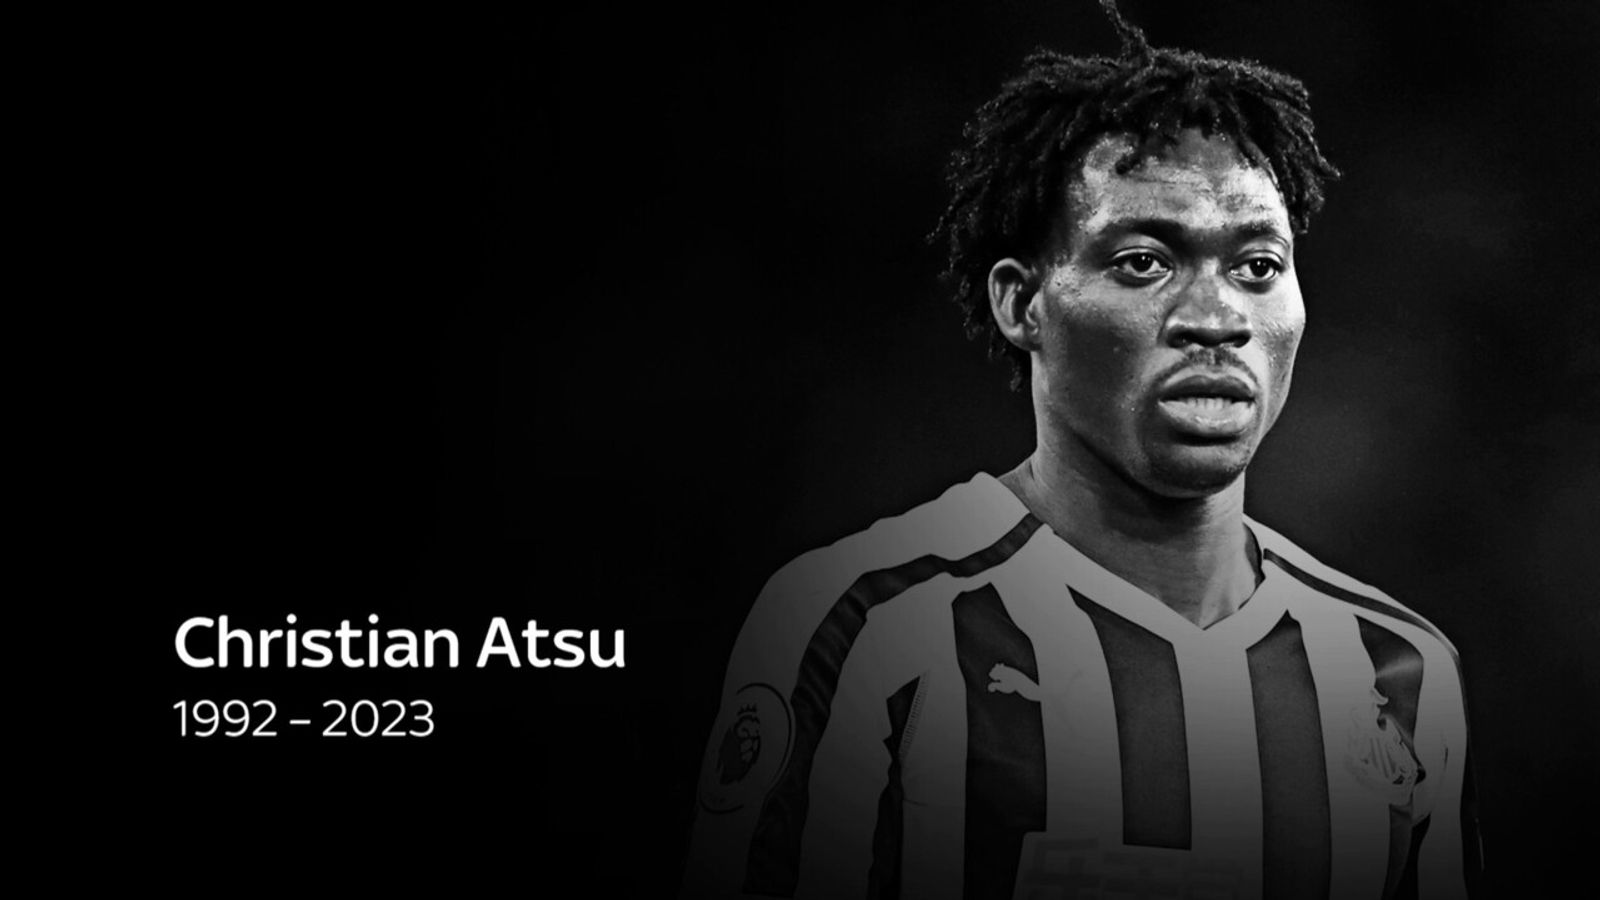 Premier League send condolences to the family of Christian Atsu